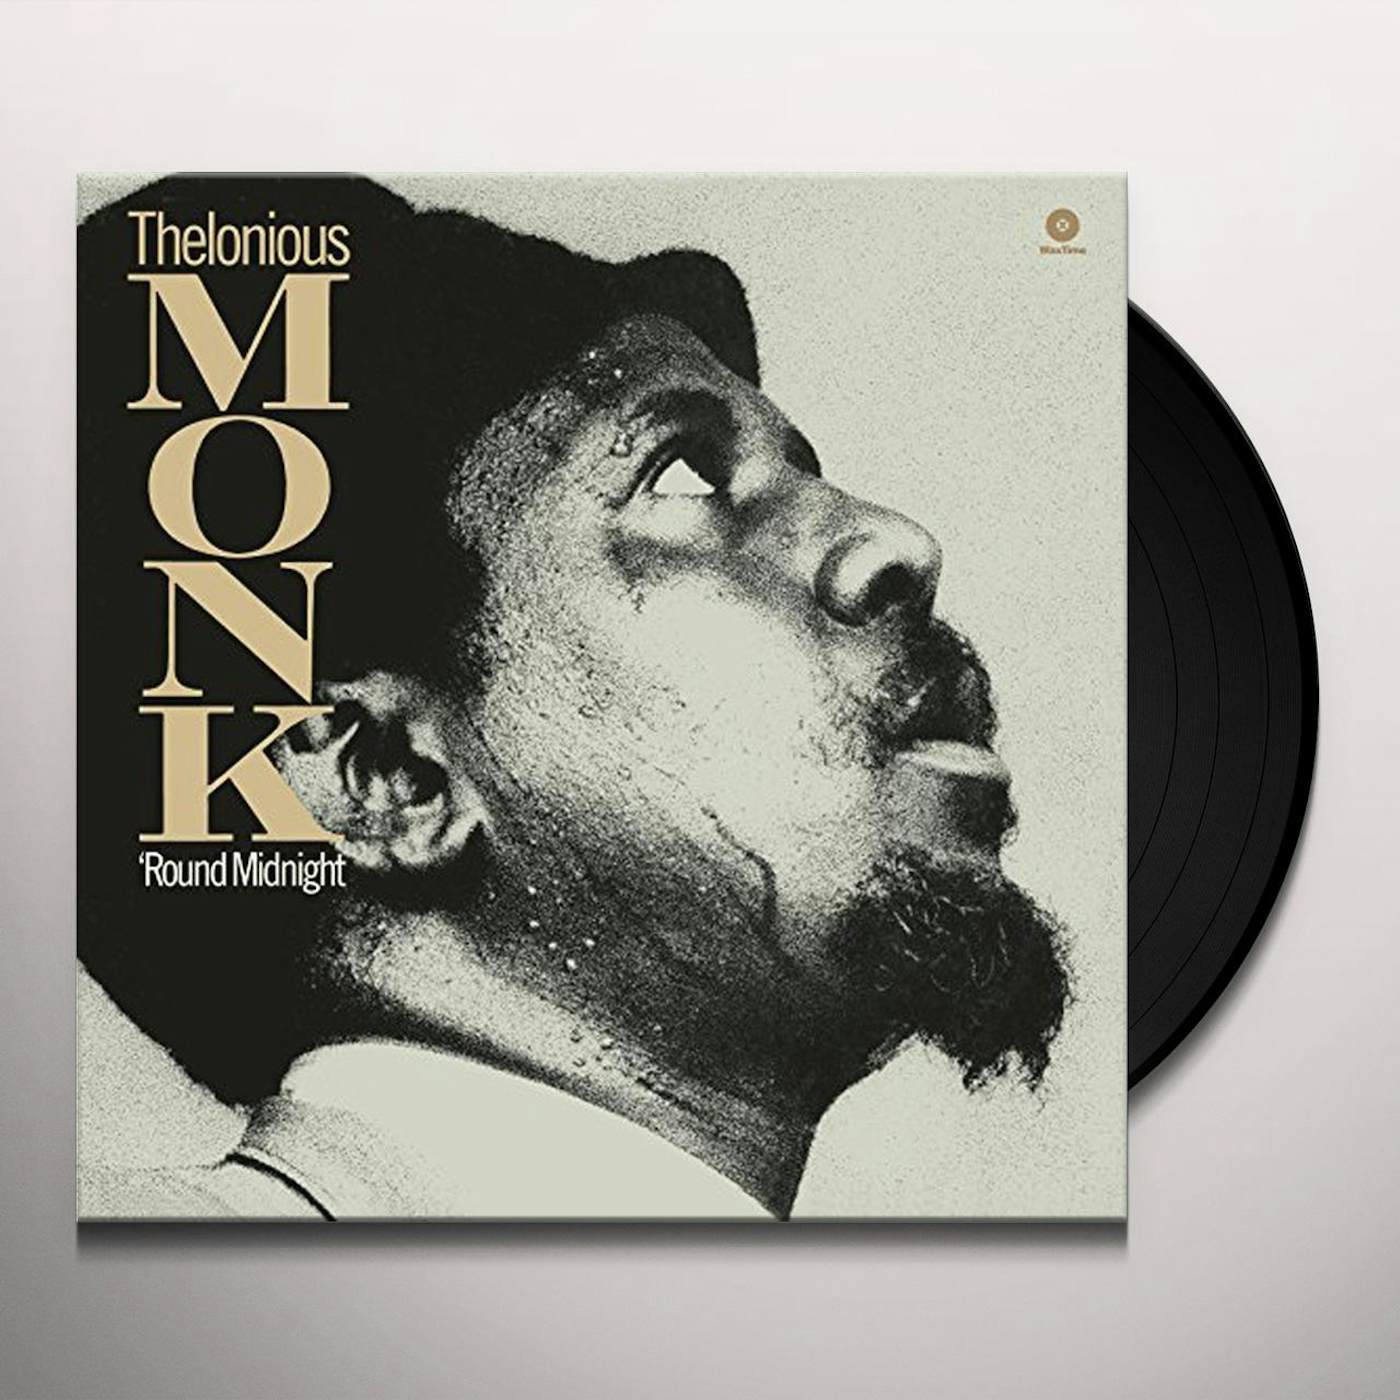 Thelonious Monk ROUND MIDNIGHT (BONUS TRACK) Vinyl Record - 180 Gram Pressing, Remastered, Spain Release